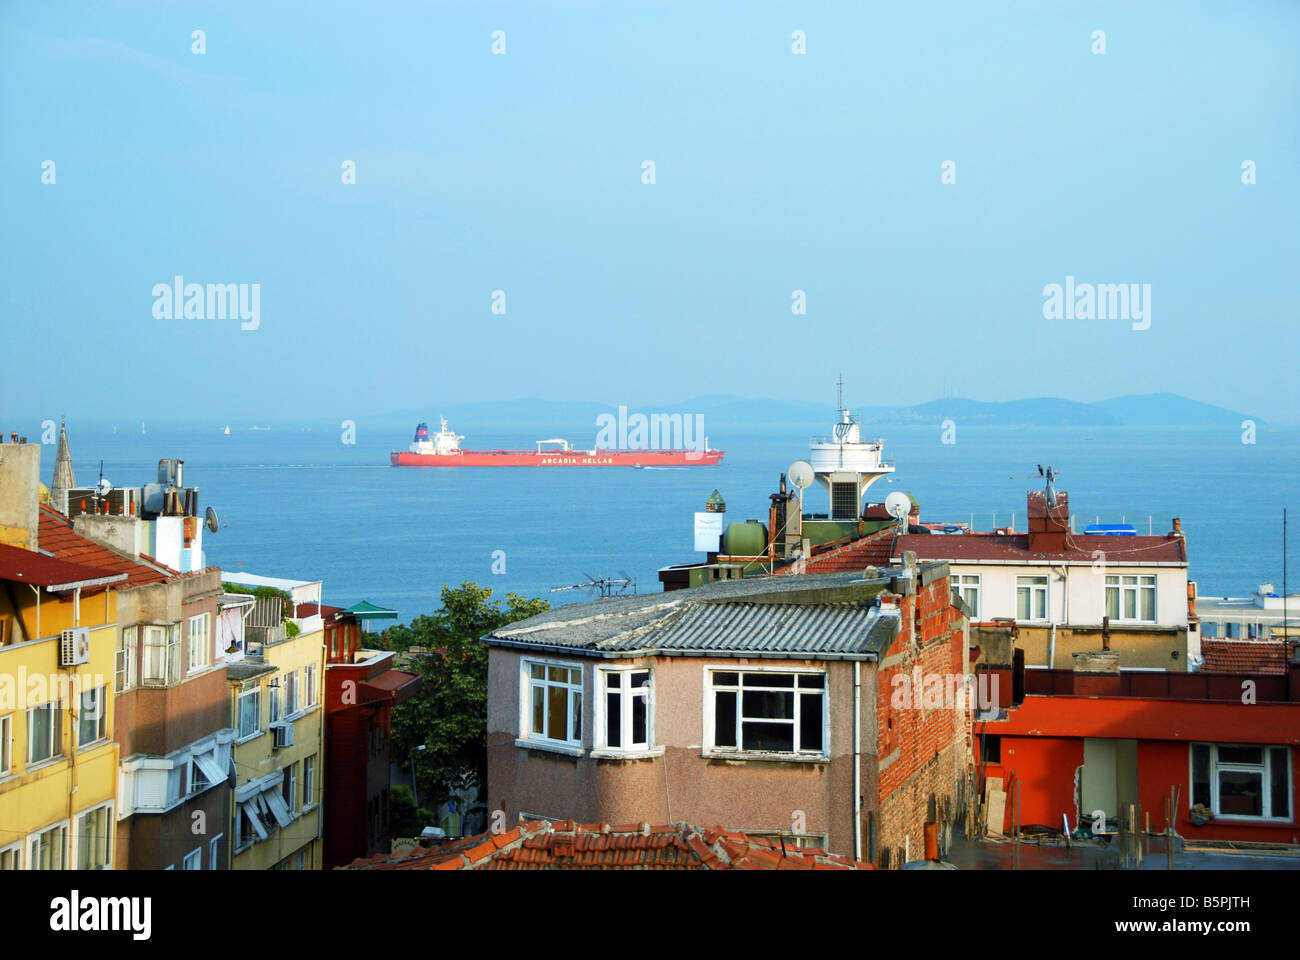 oil tanker in the Bosphorous Straits, Turkey Stock Photo